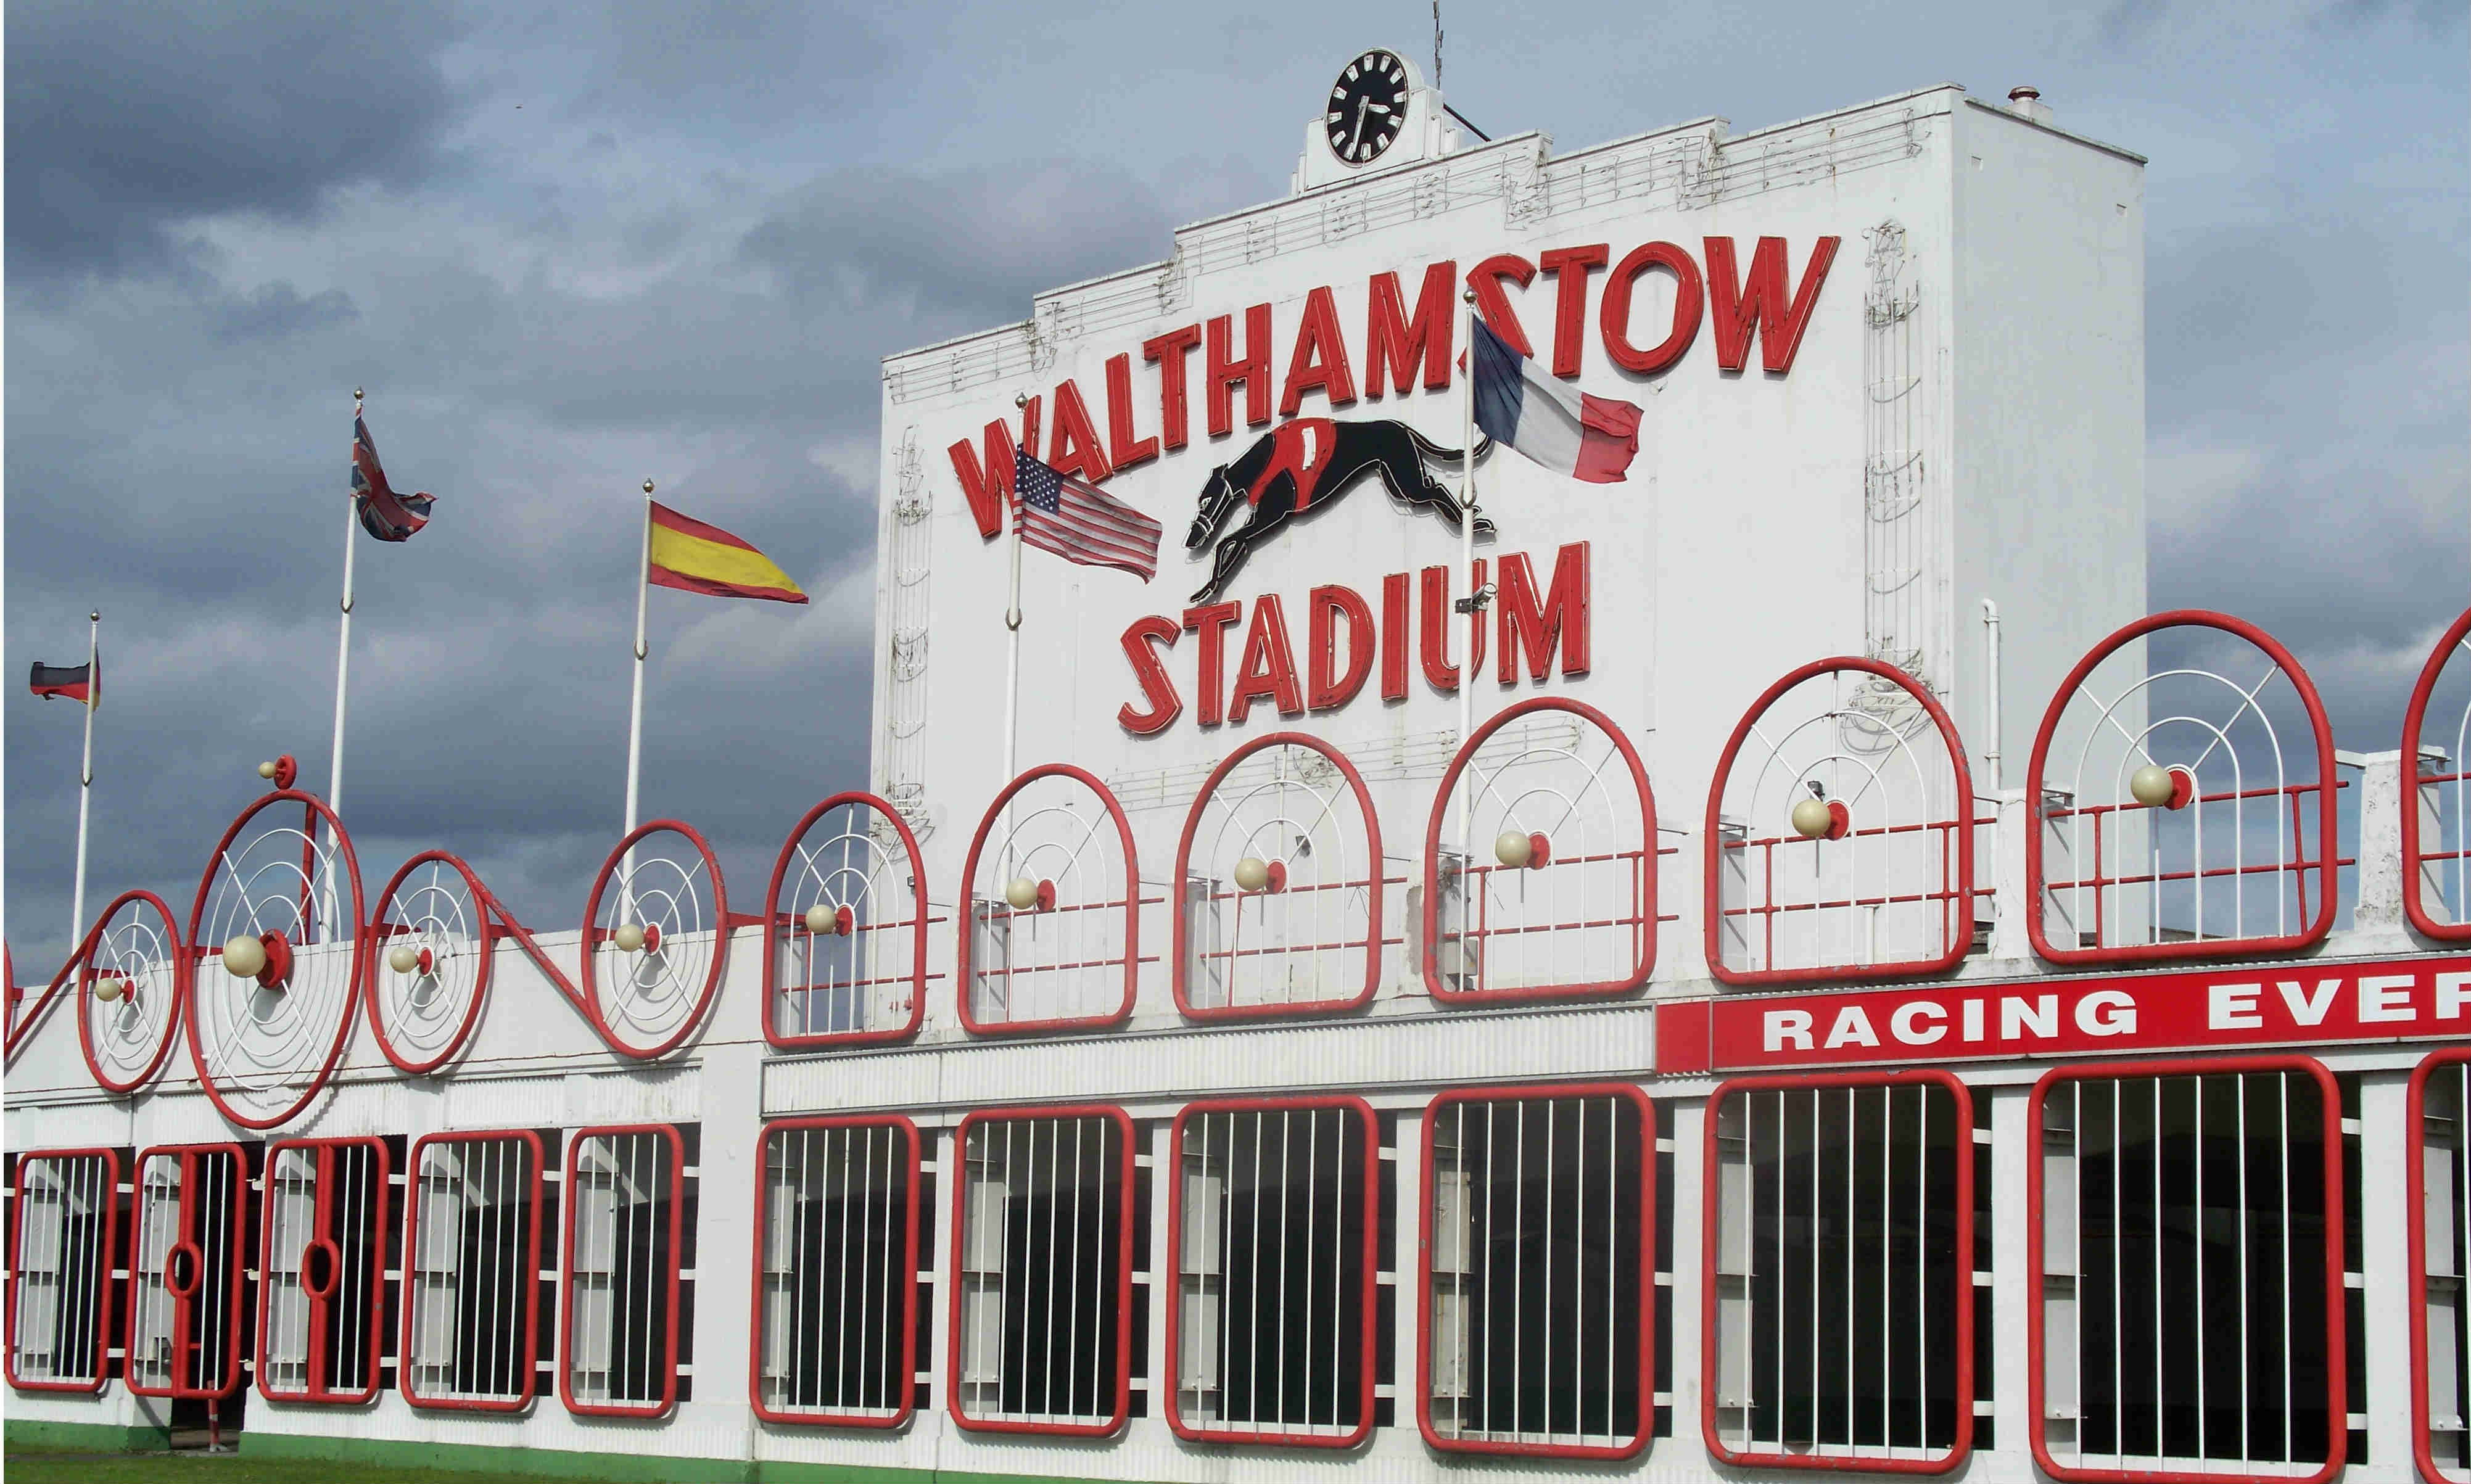 Urmet video entry at former Walthamstow greyhound- racing track